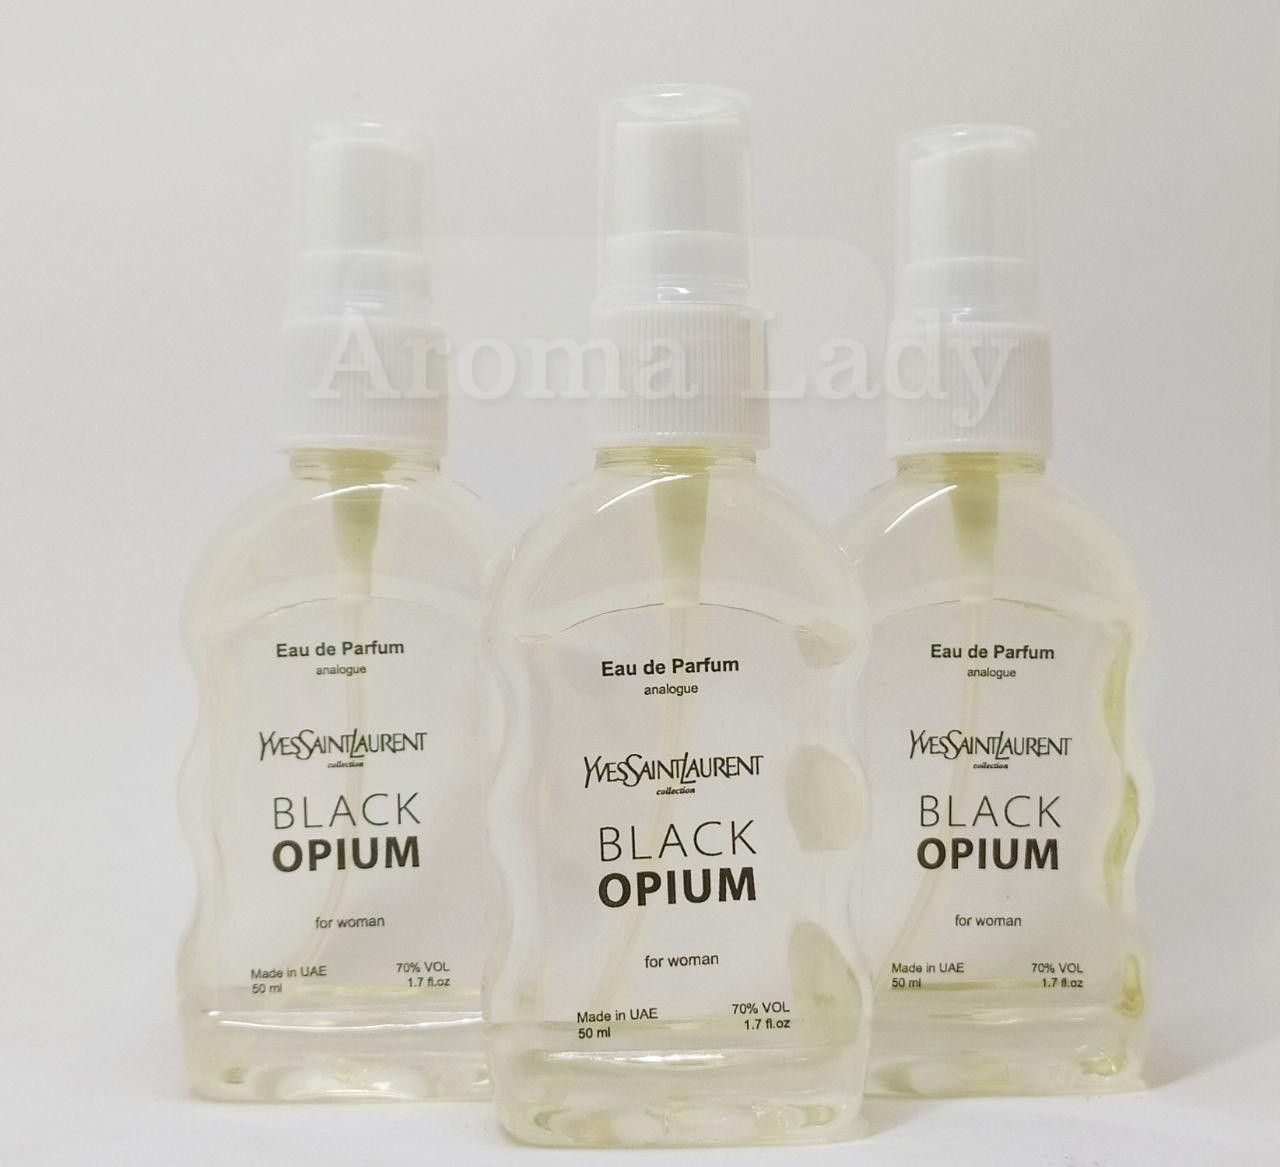 Жіноча парфумерна вода Yves Saint Laurent Black Opium (Ів сін лоран блек опіків) 50 мл